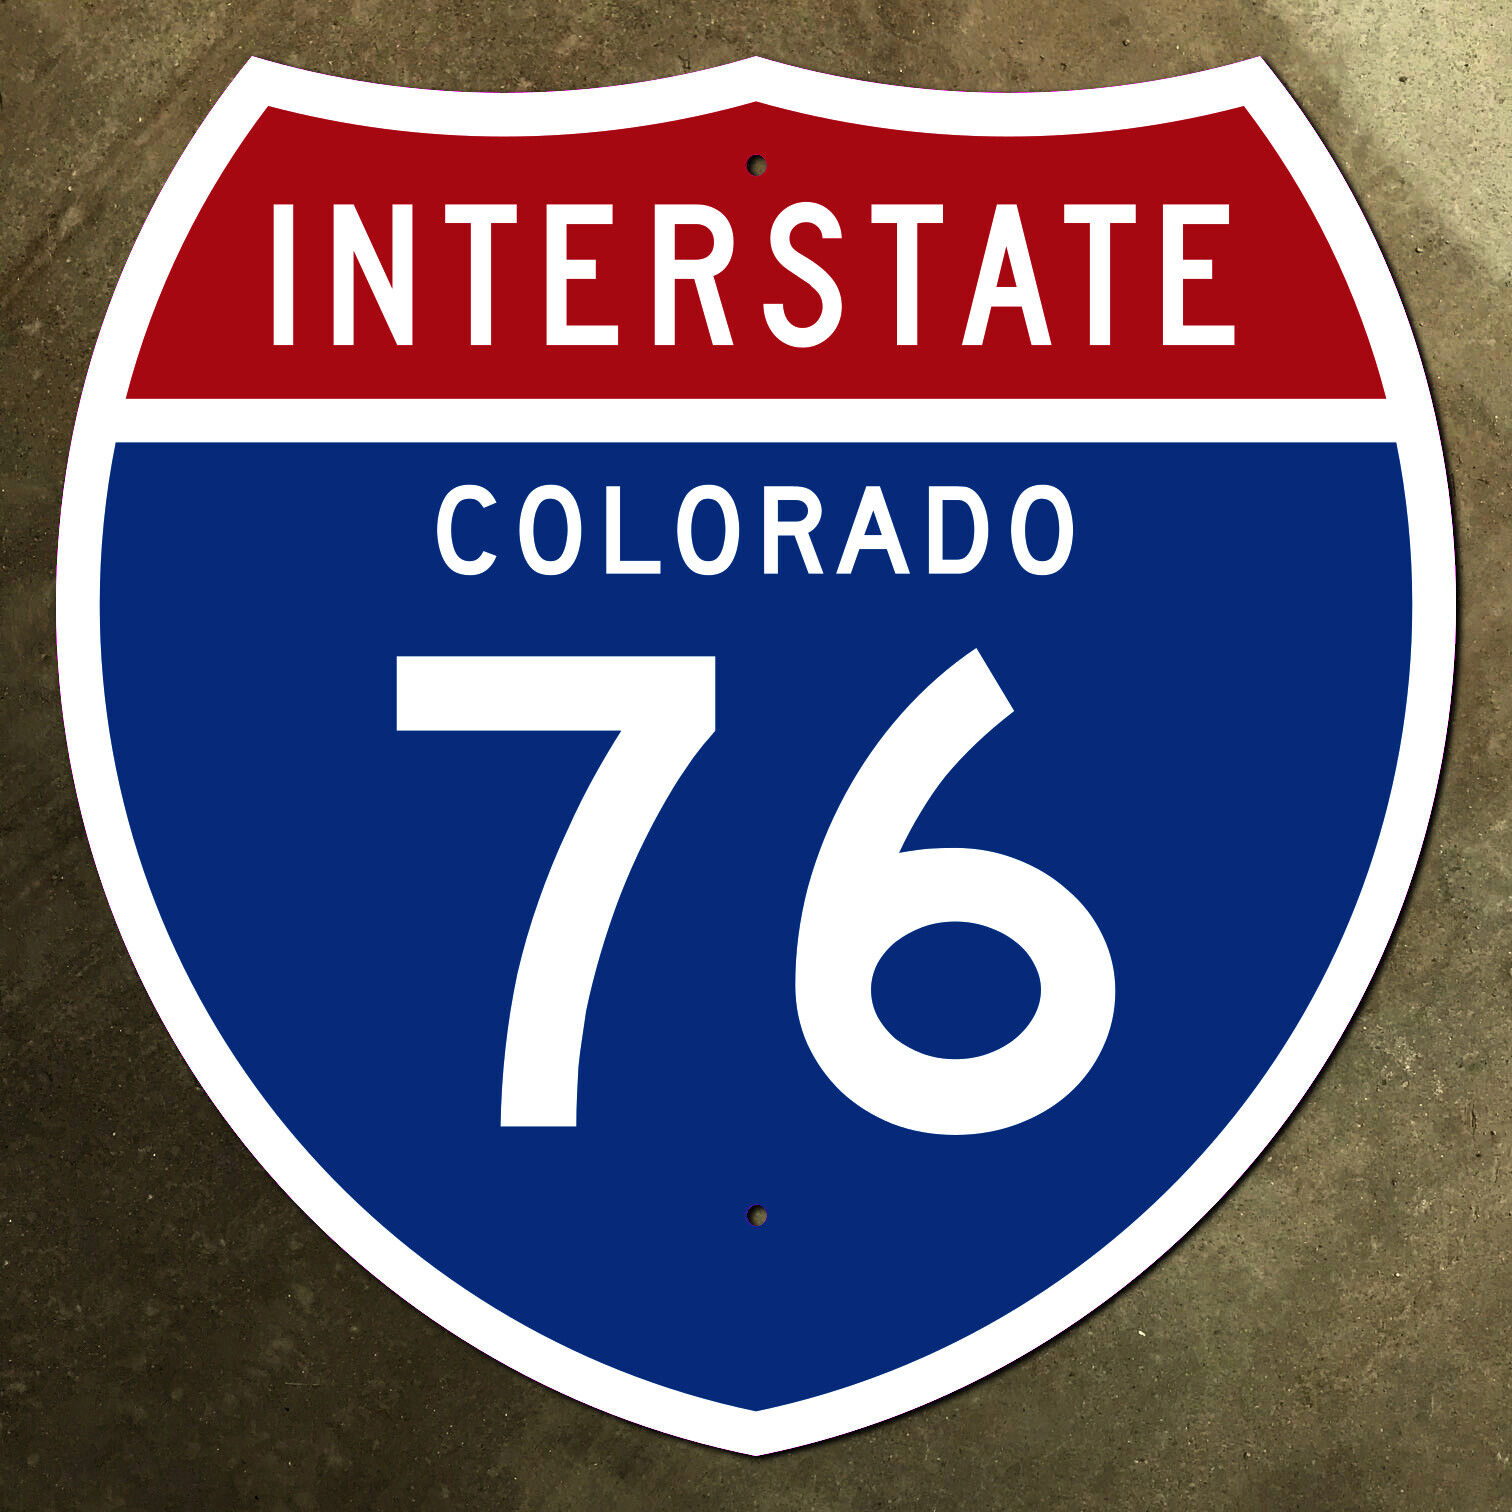 Colorado interstate route 76 Denver Aurora Arvada highway marker road sign 18x18